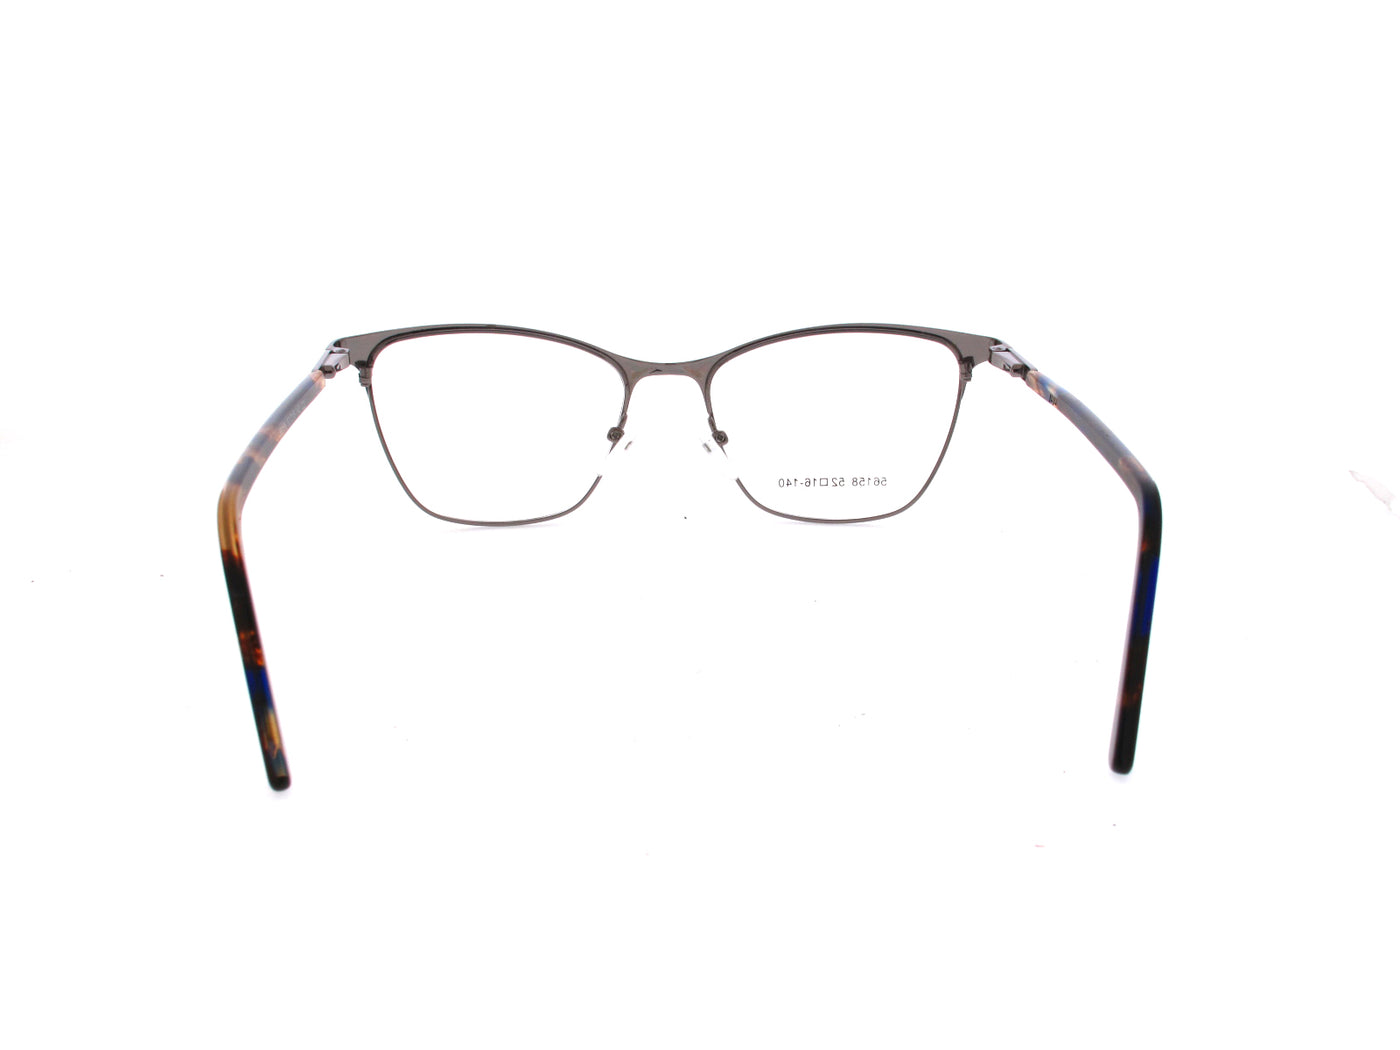 Cateye Glasses 663466